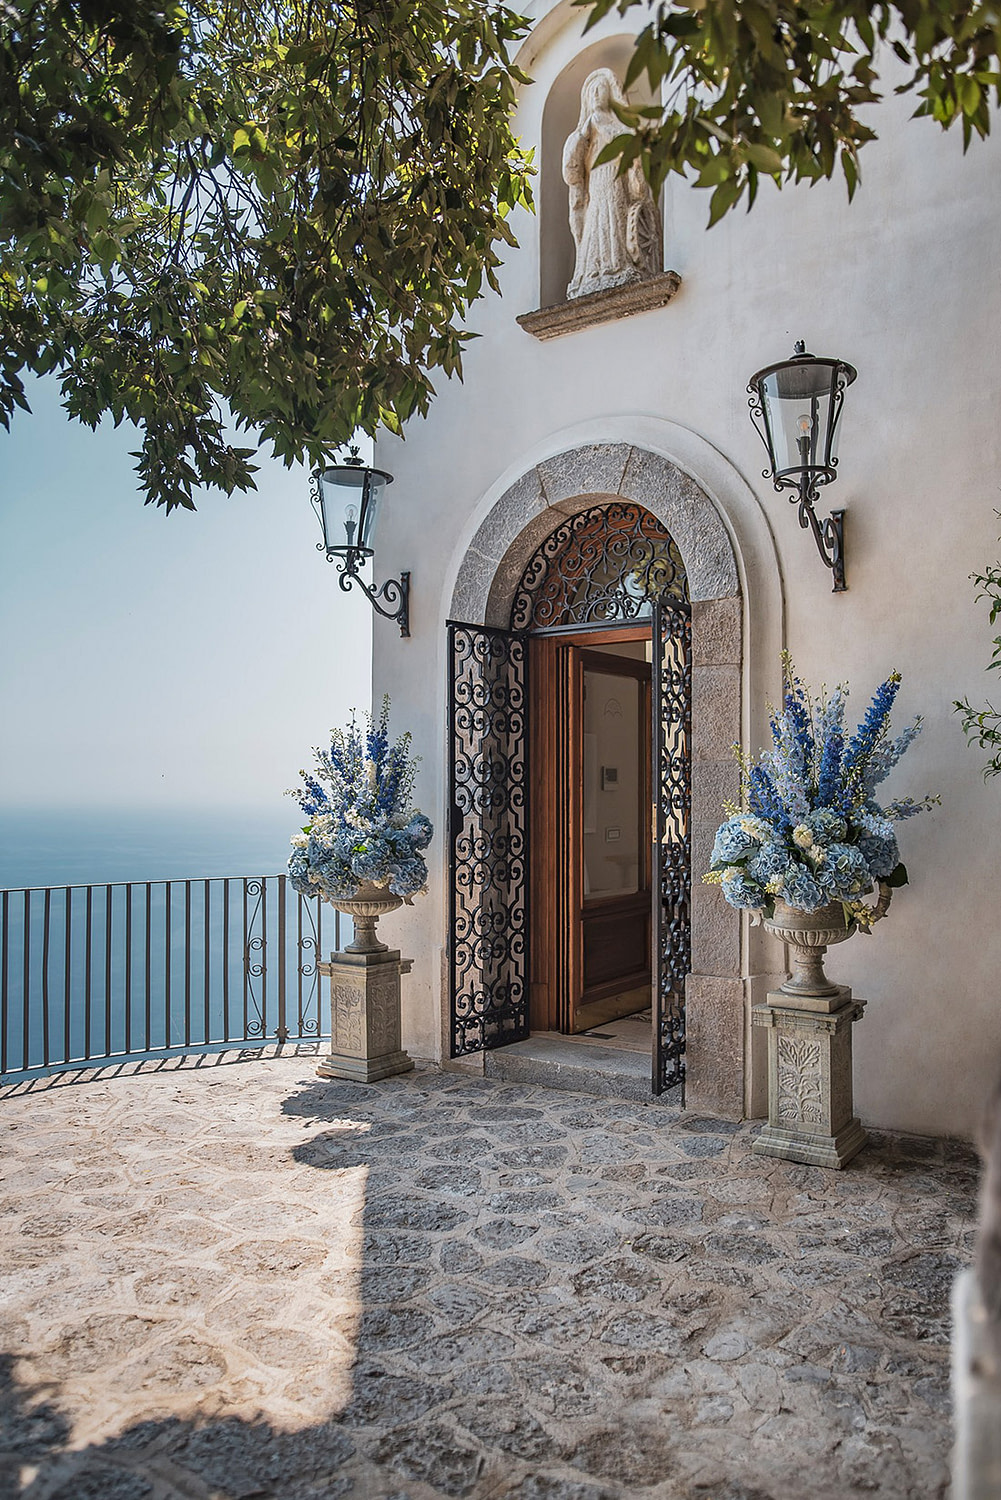 Wedding villa on the Amalfi Coast